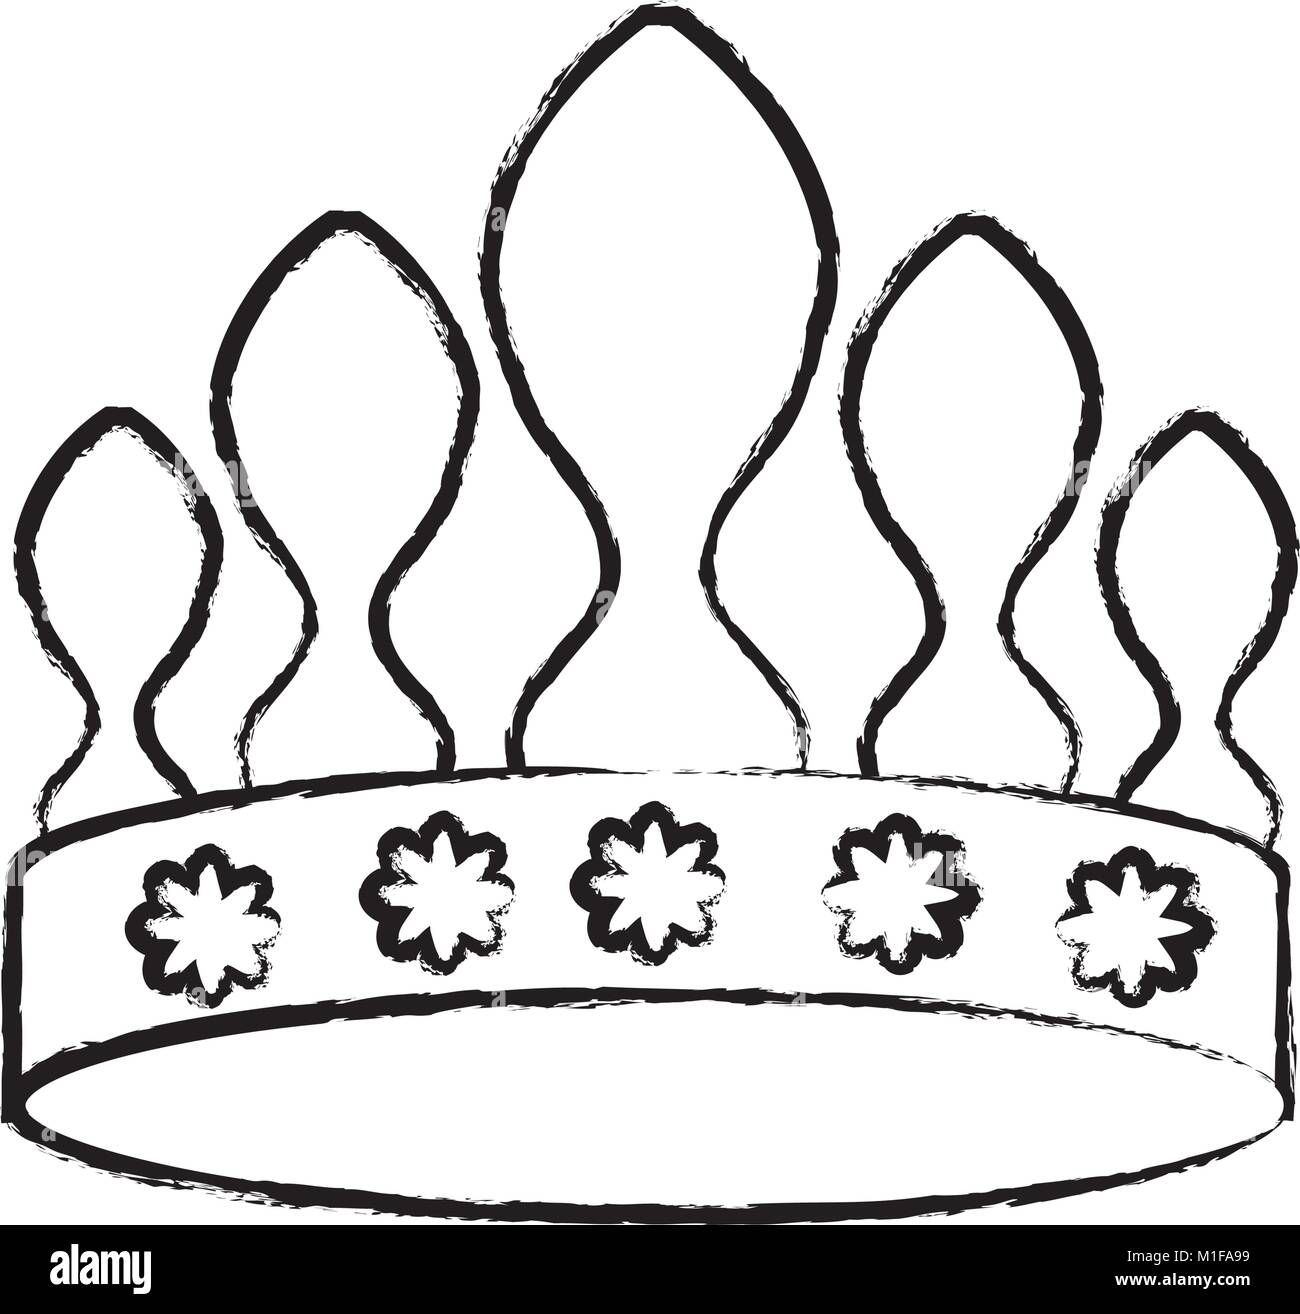 Queen crown icon image Stock Vector